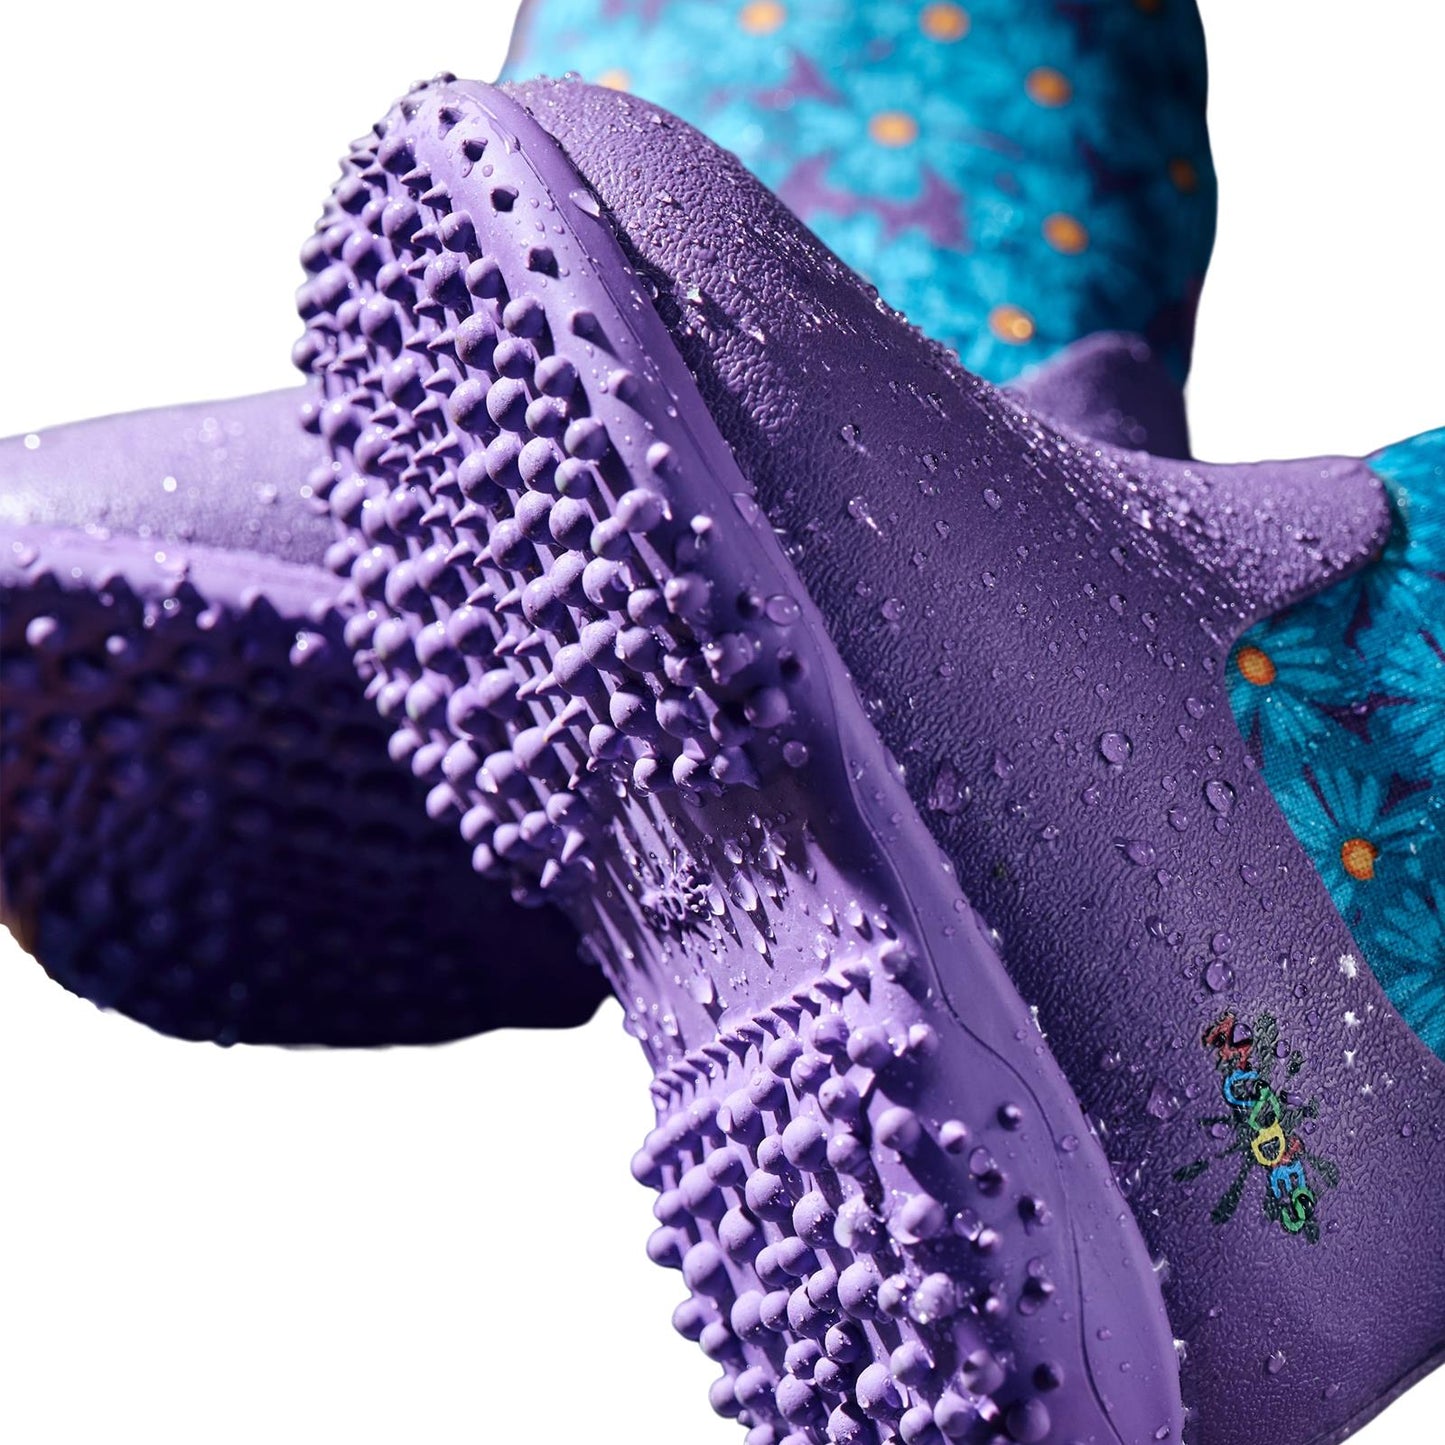 Muddies Puddle Flower Violet Infants Kids Warm Wellies Boots